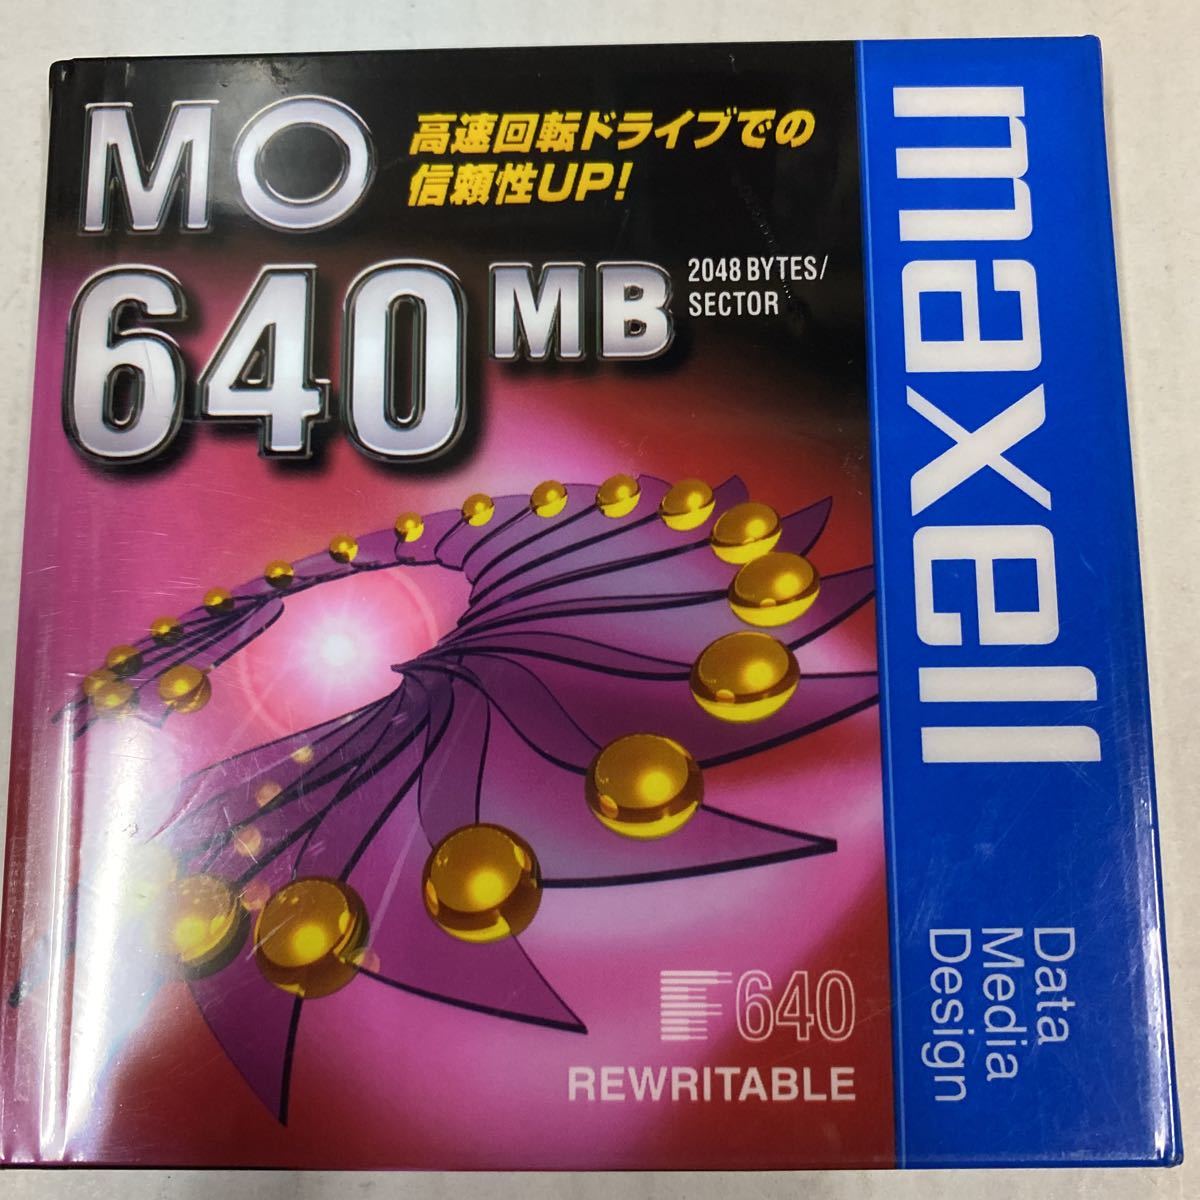  Hitachi mak cell mak cell MO 640MB Anne format maxell 3.5 type 